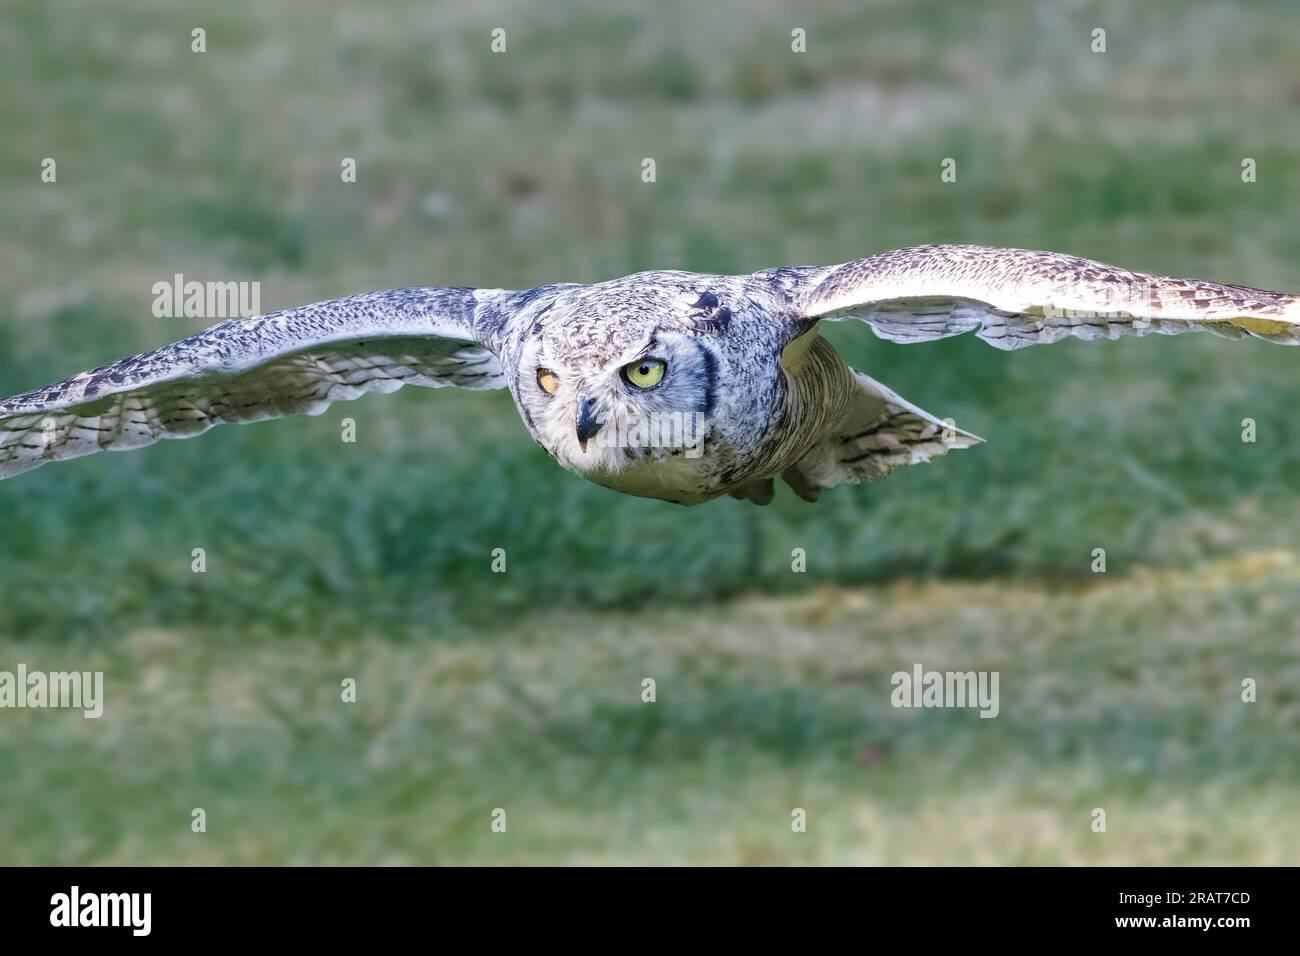 Great Horned Owl in flight Stock Photo